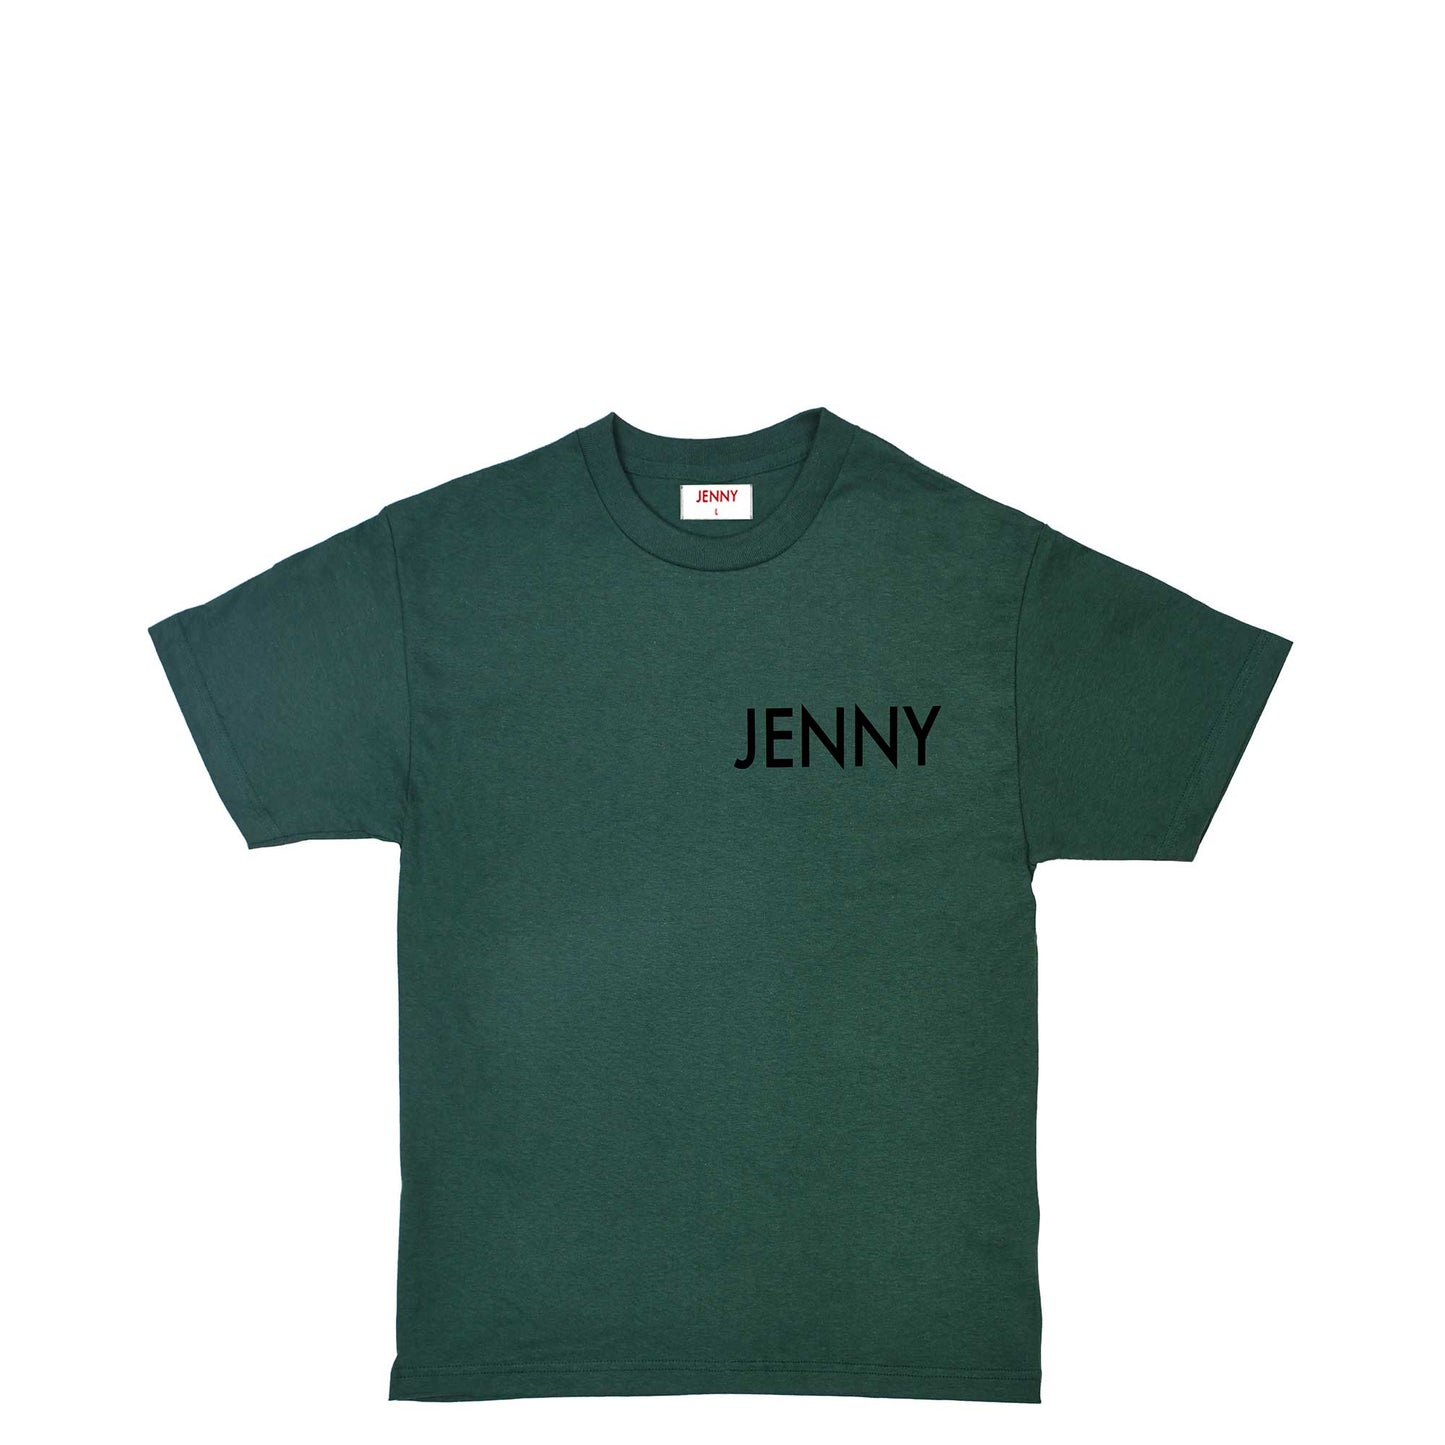 Jenny Snek T-Shirt, forest green - Tiki Room Skateboards - 2